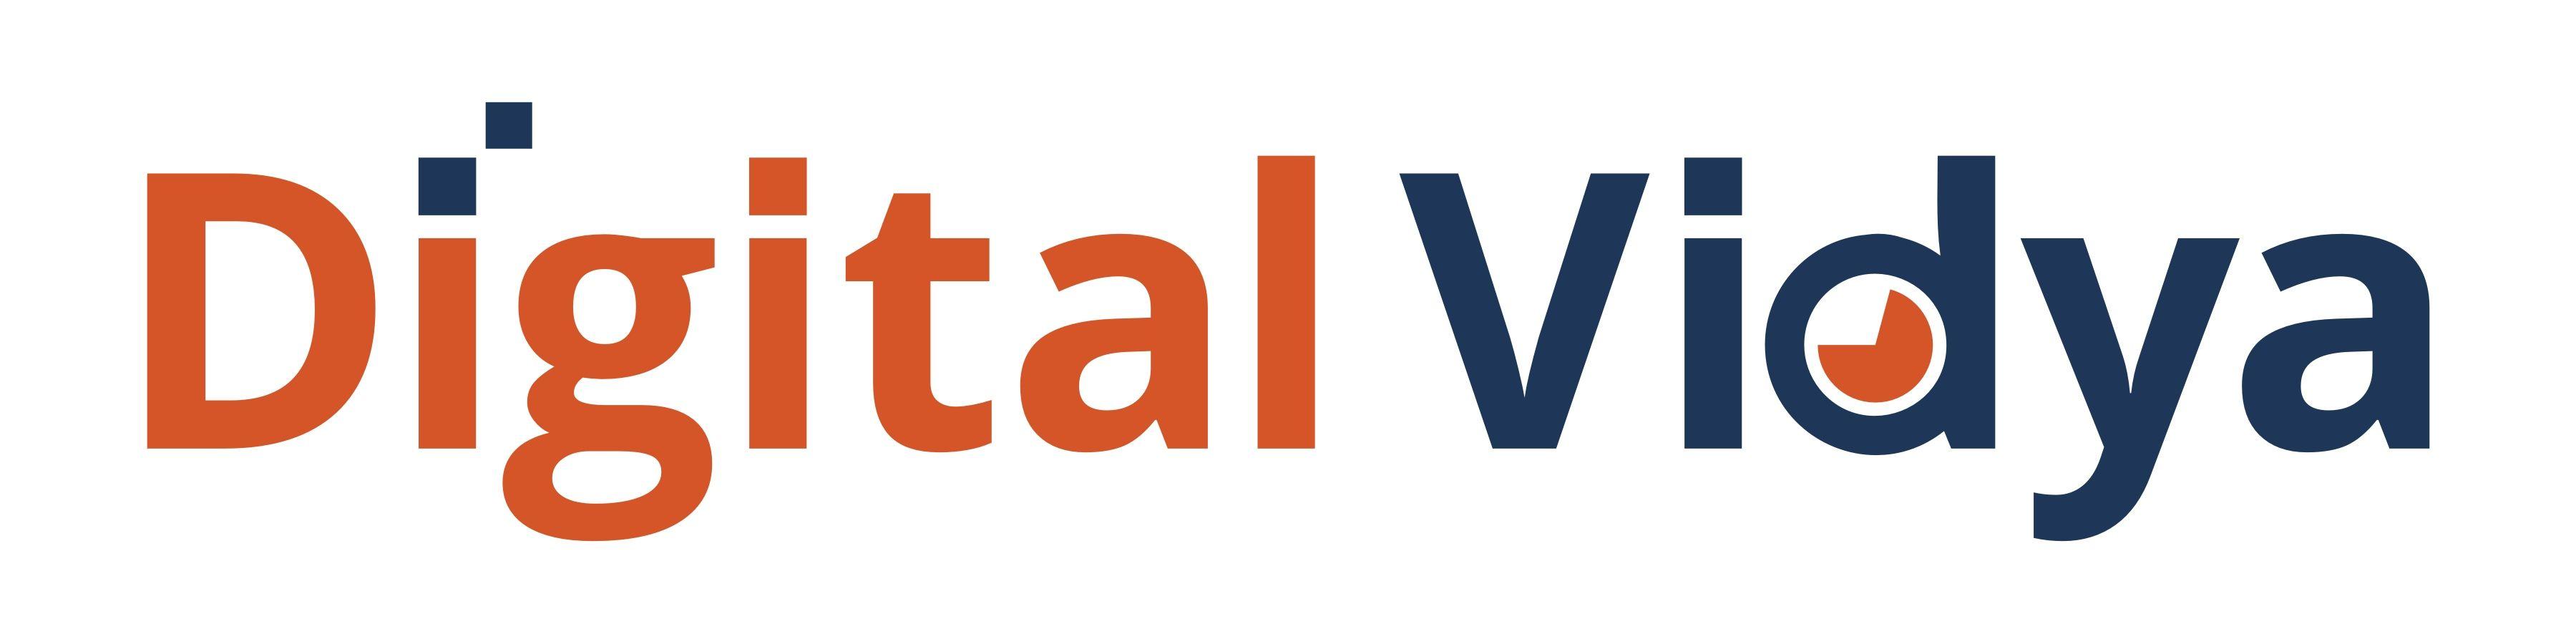 Vidya Logo - Digital Vidya launches its new logo | Digital Vidya logo | Digital ...